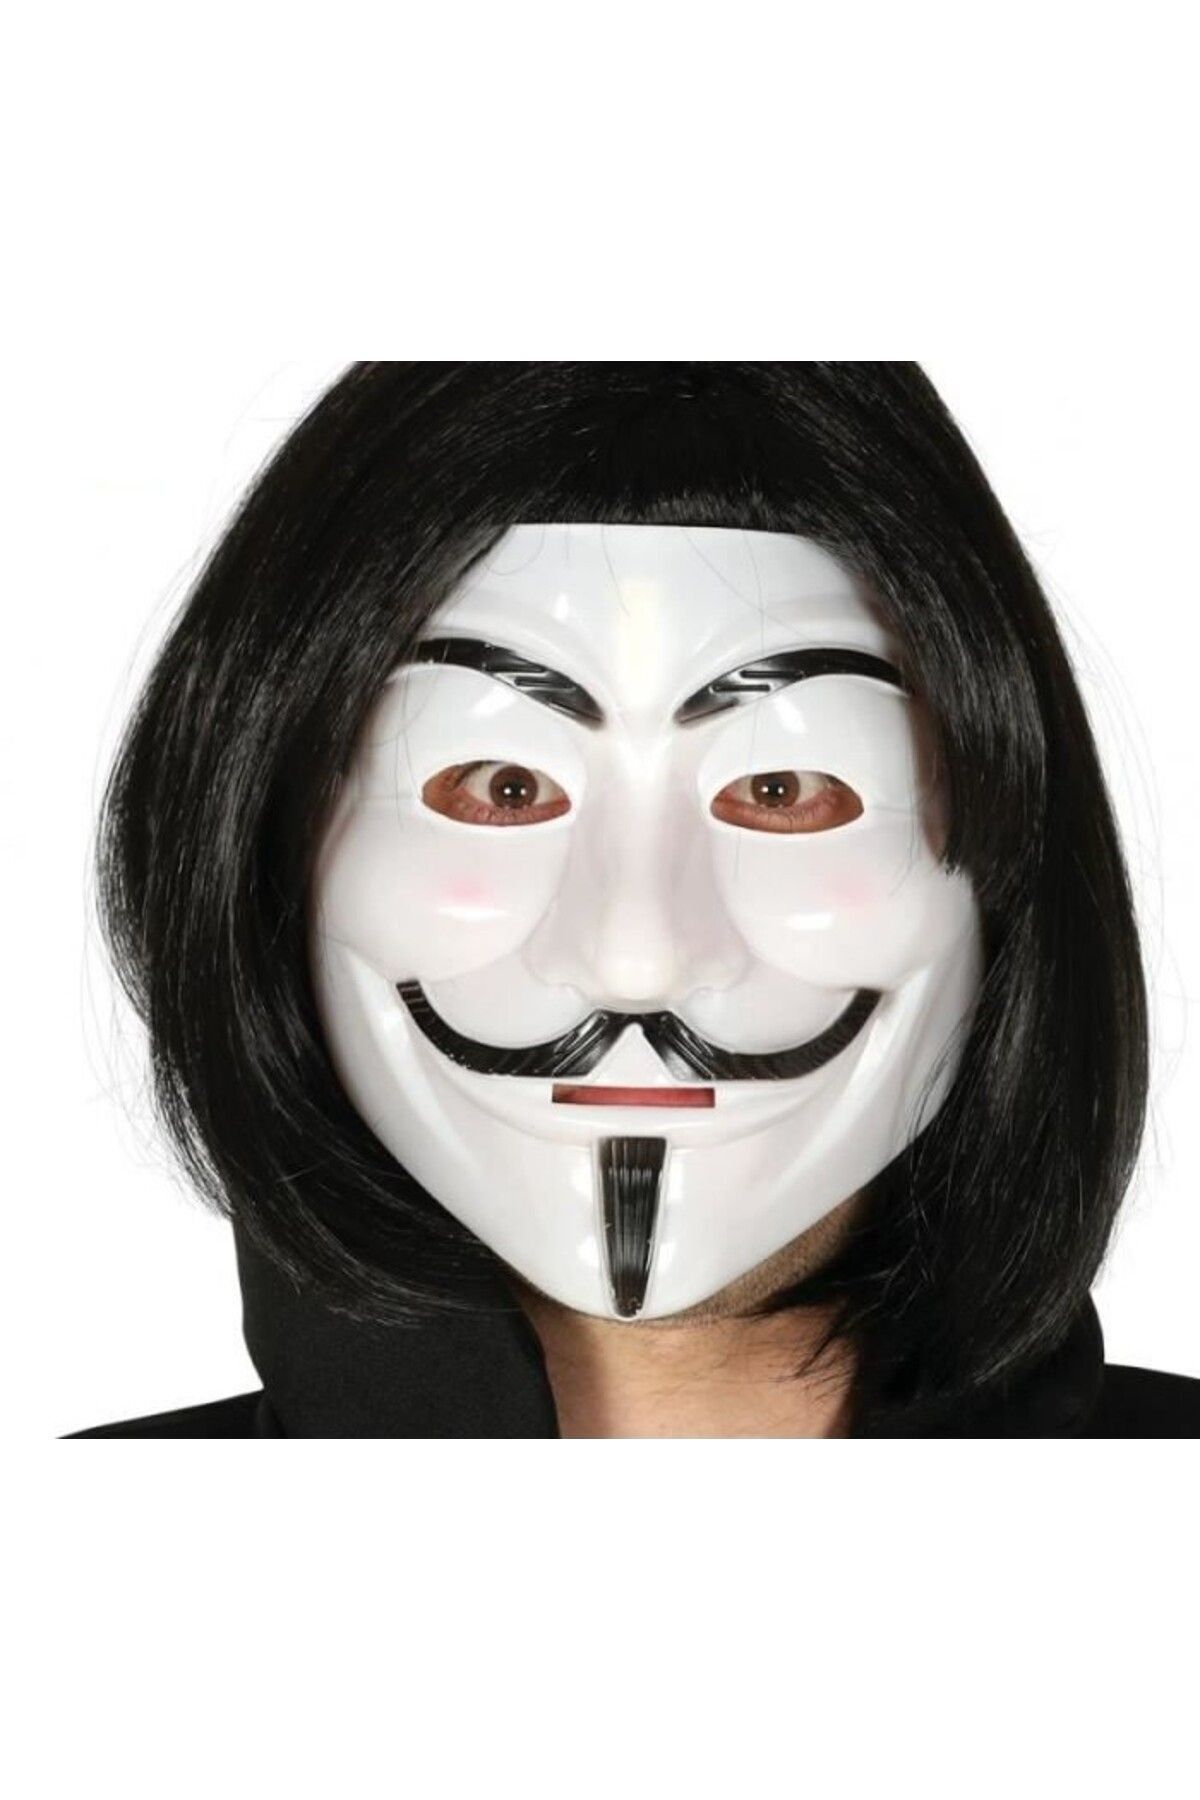 RELATOS Siyah Renk Takma Kısa Saç Ve V For Maskesi Anonymous Maskesi (4415)